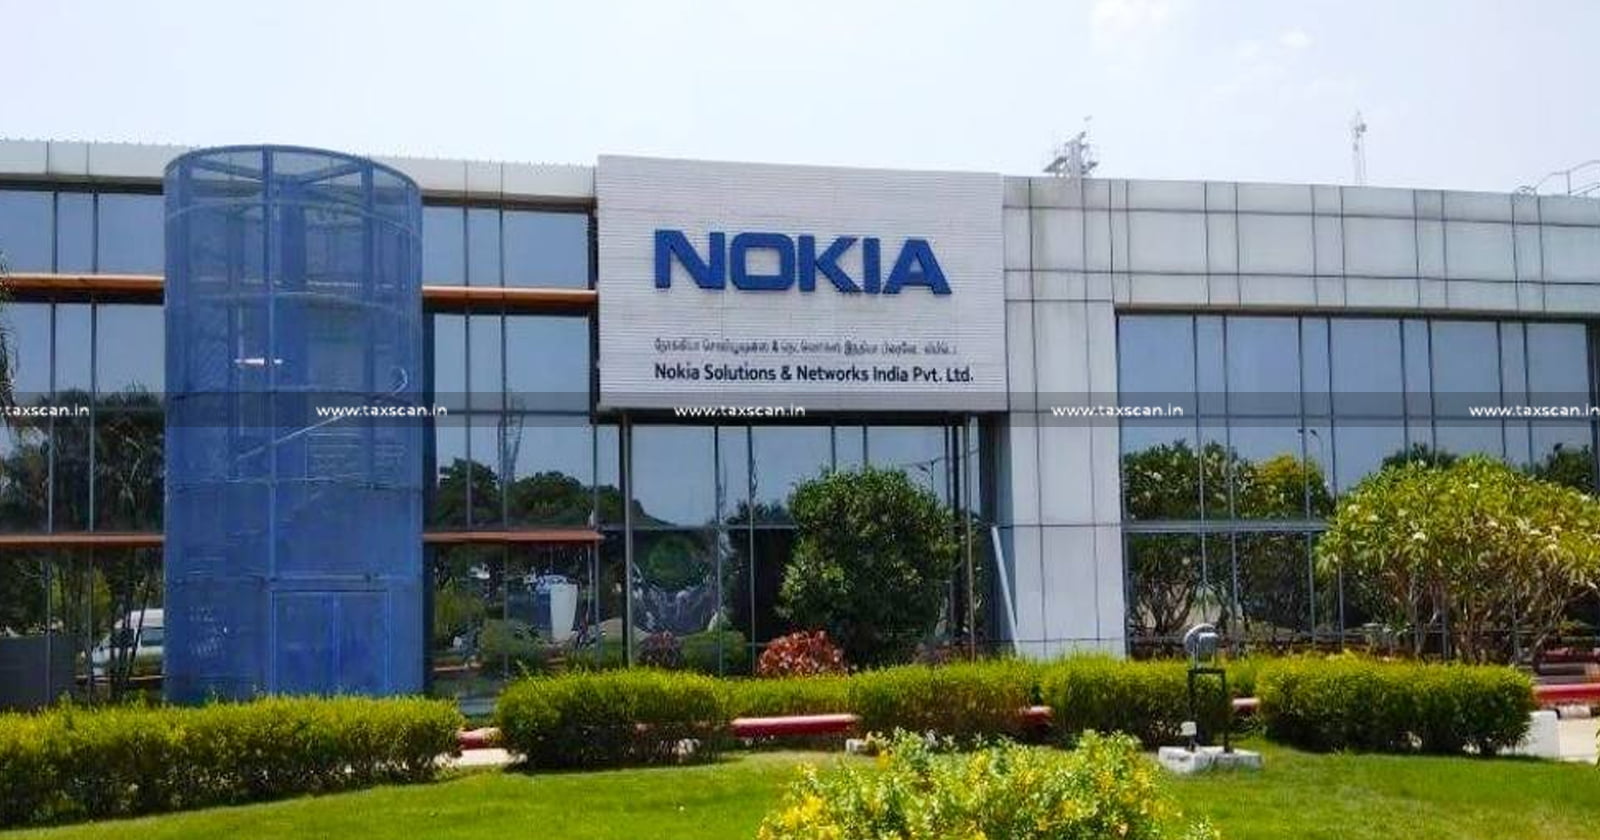 Global Net Loss - Delhi High Court - PE - Permanent Establishment - Nokia - relief to Nokia - taxscan